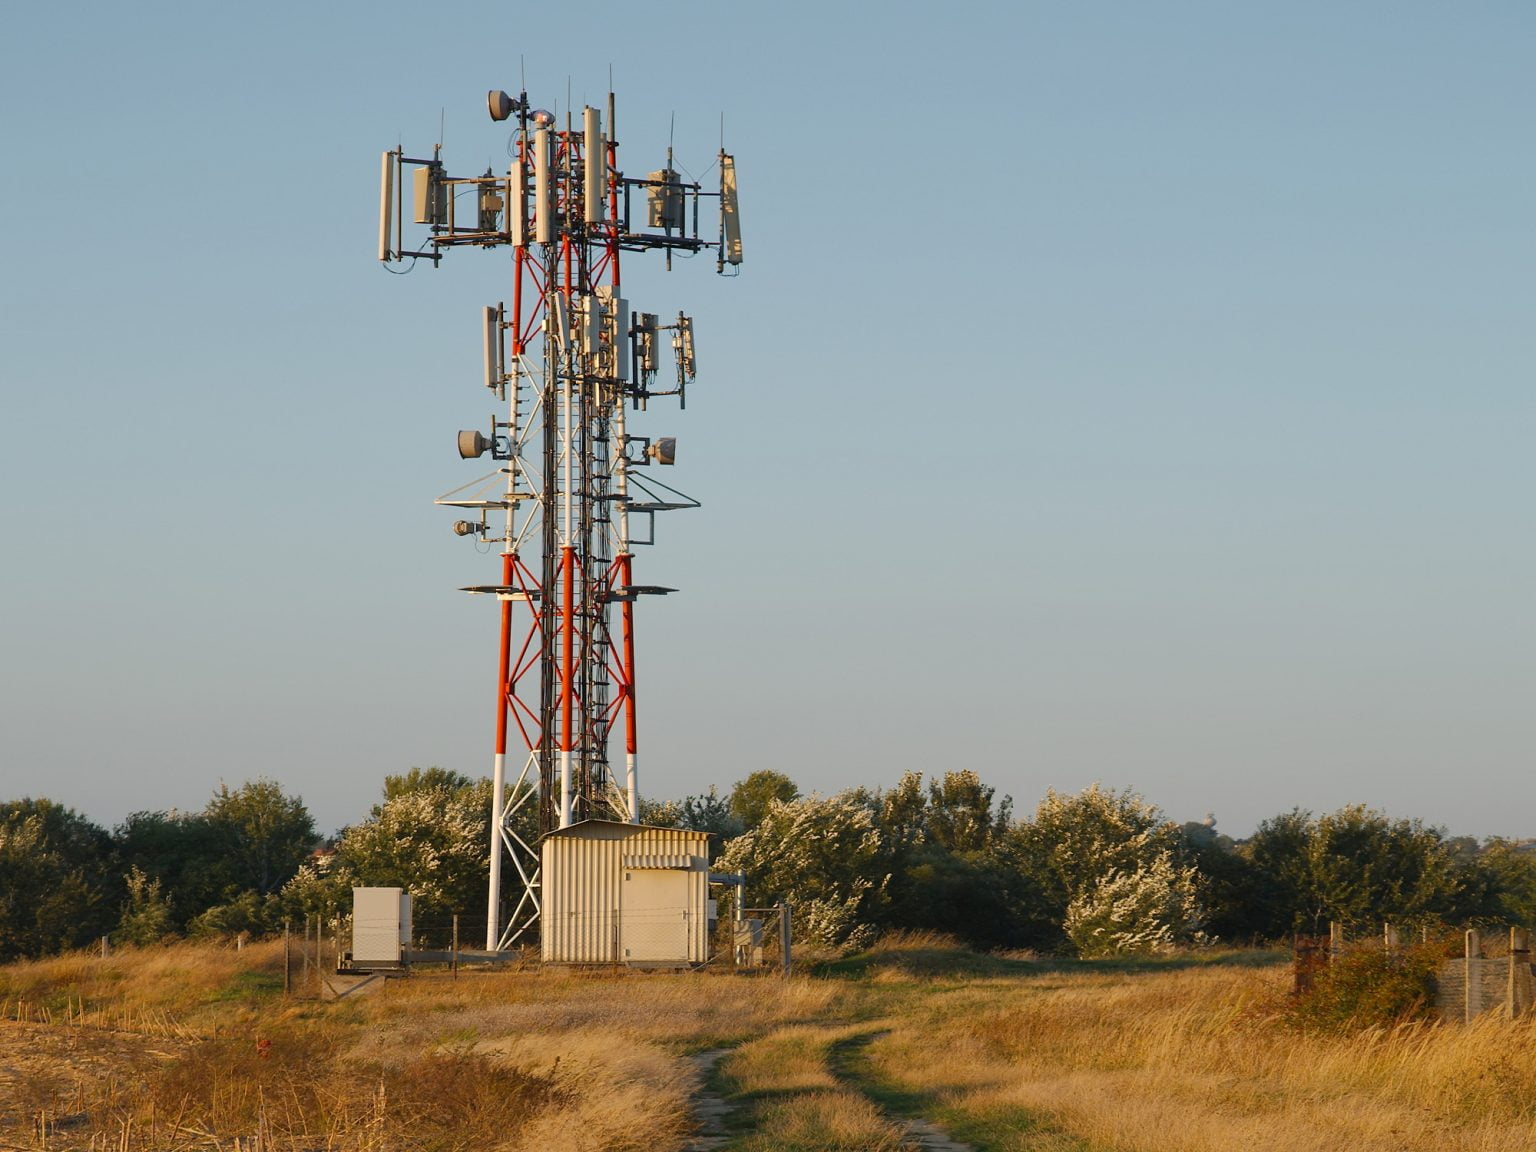 Broadband tower in a field